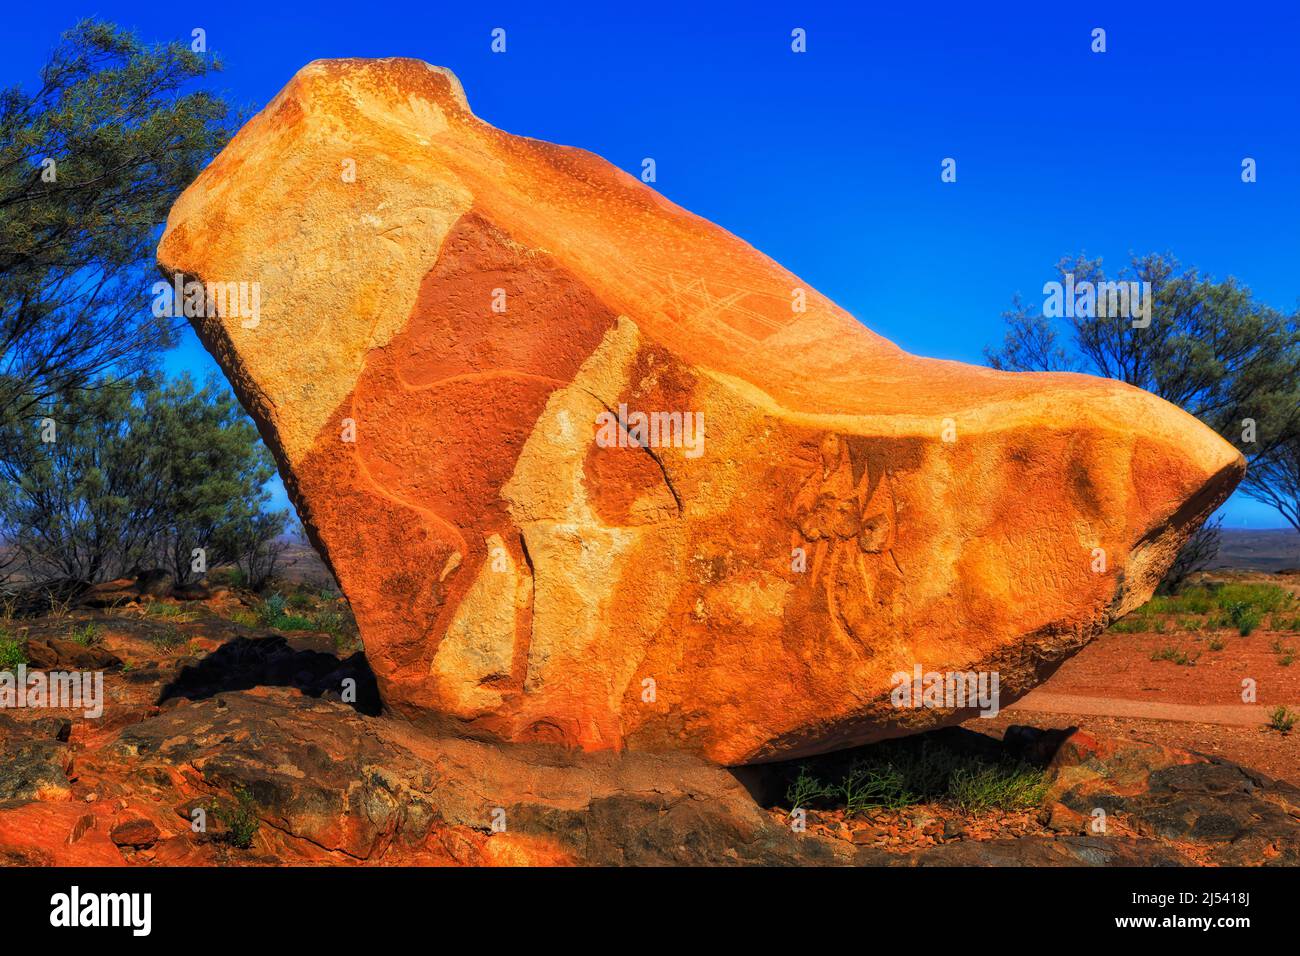 Huge sandstone rock boulder with carvign in Broken hill city public park of Australian outback. Stock Photo